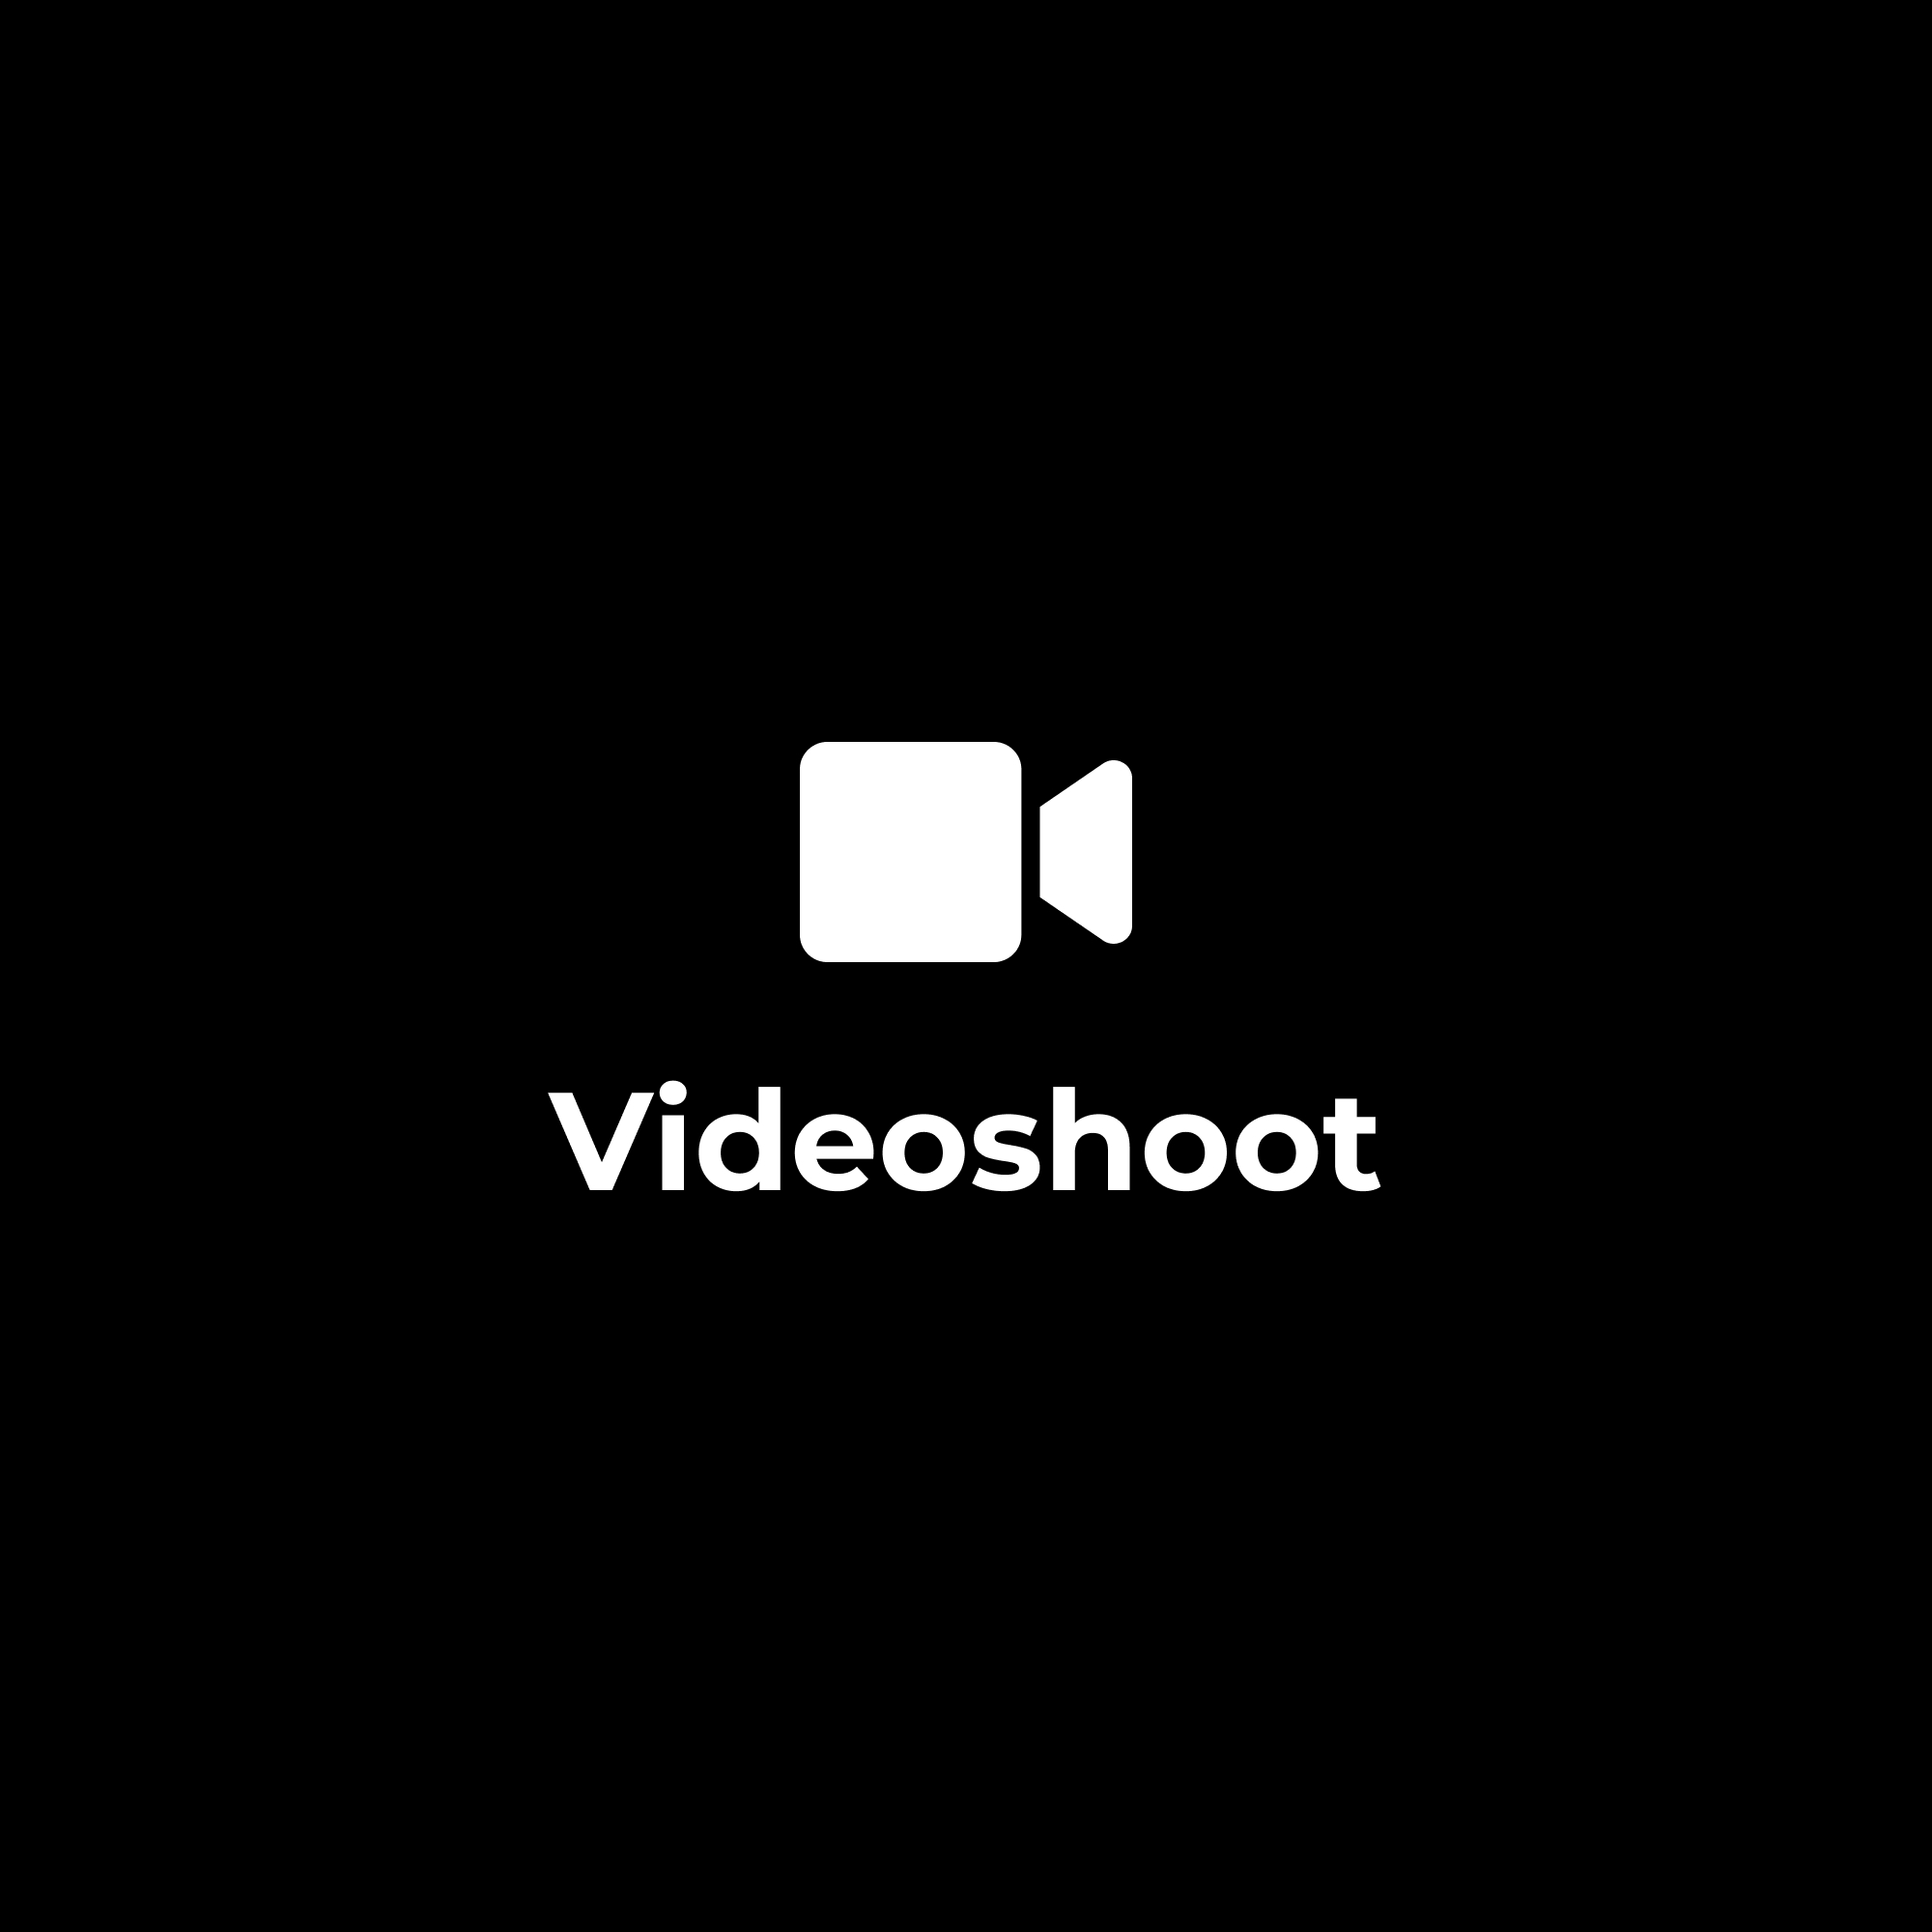 Videoshoot